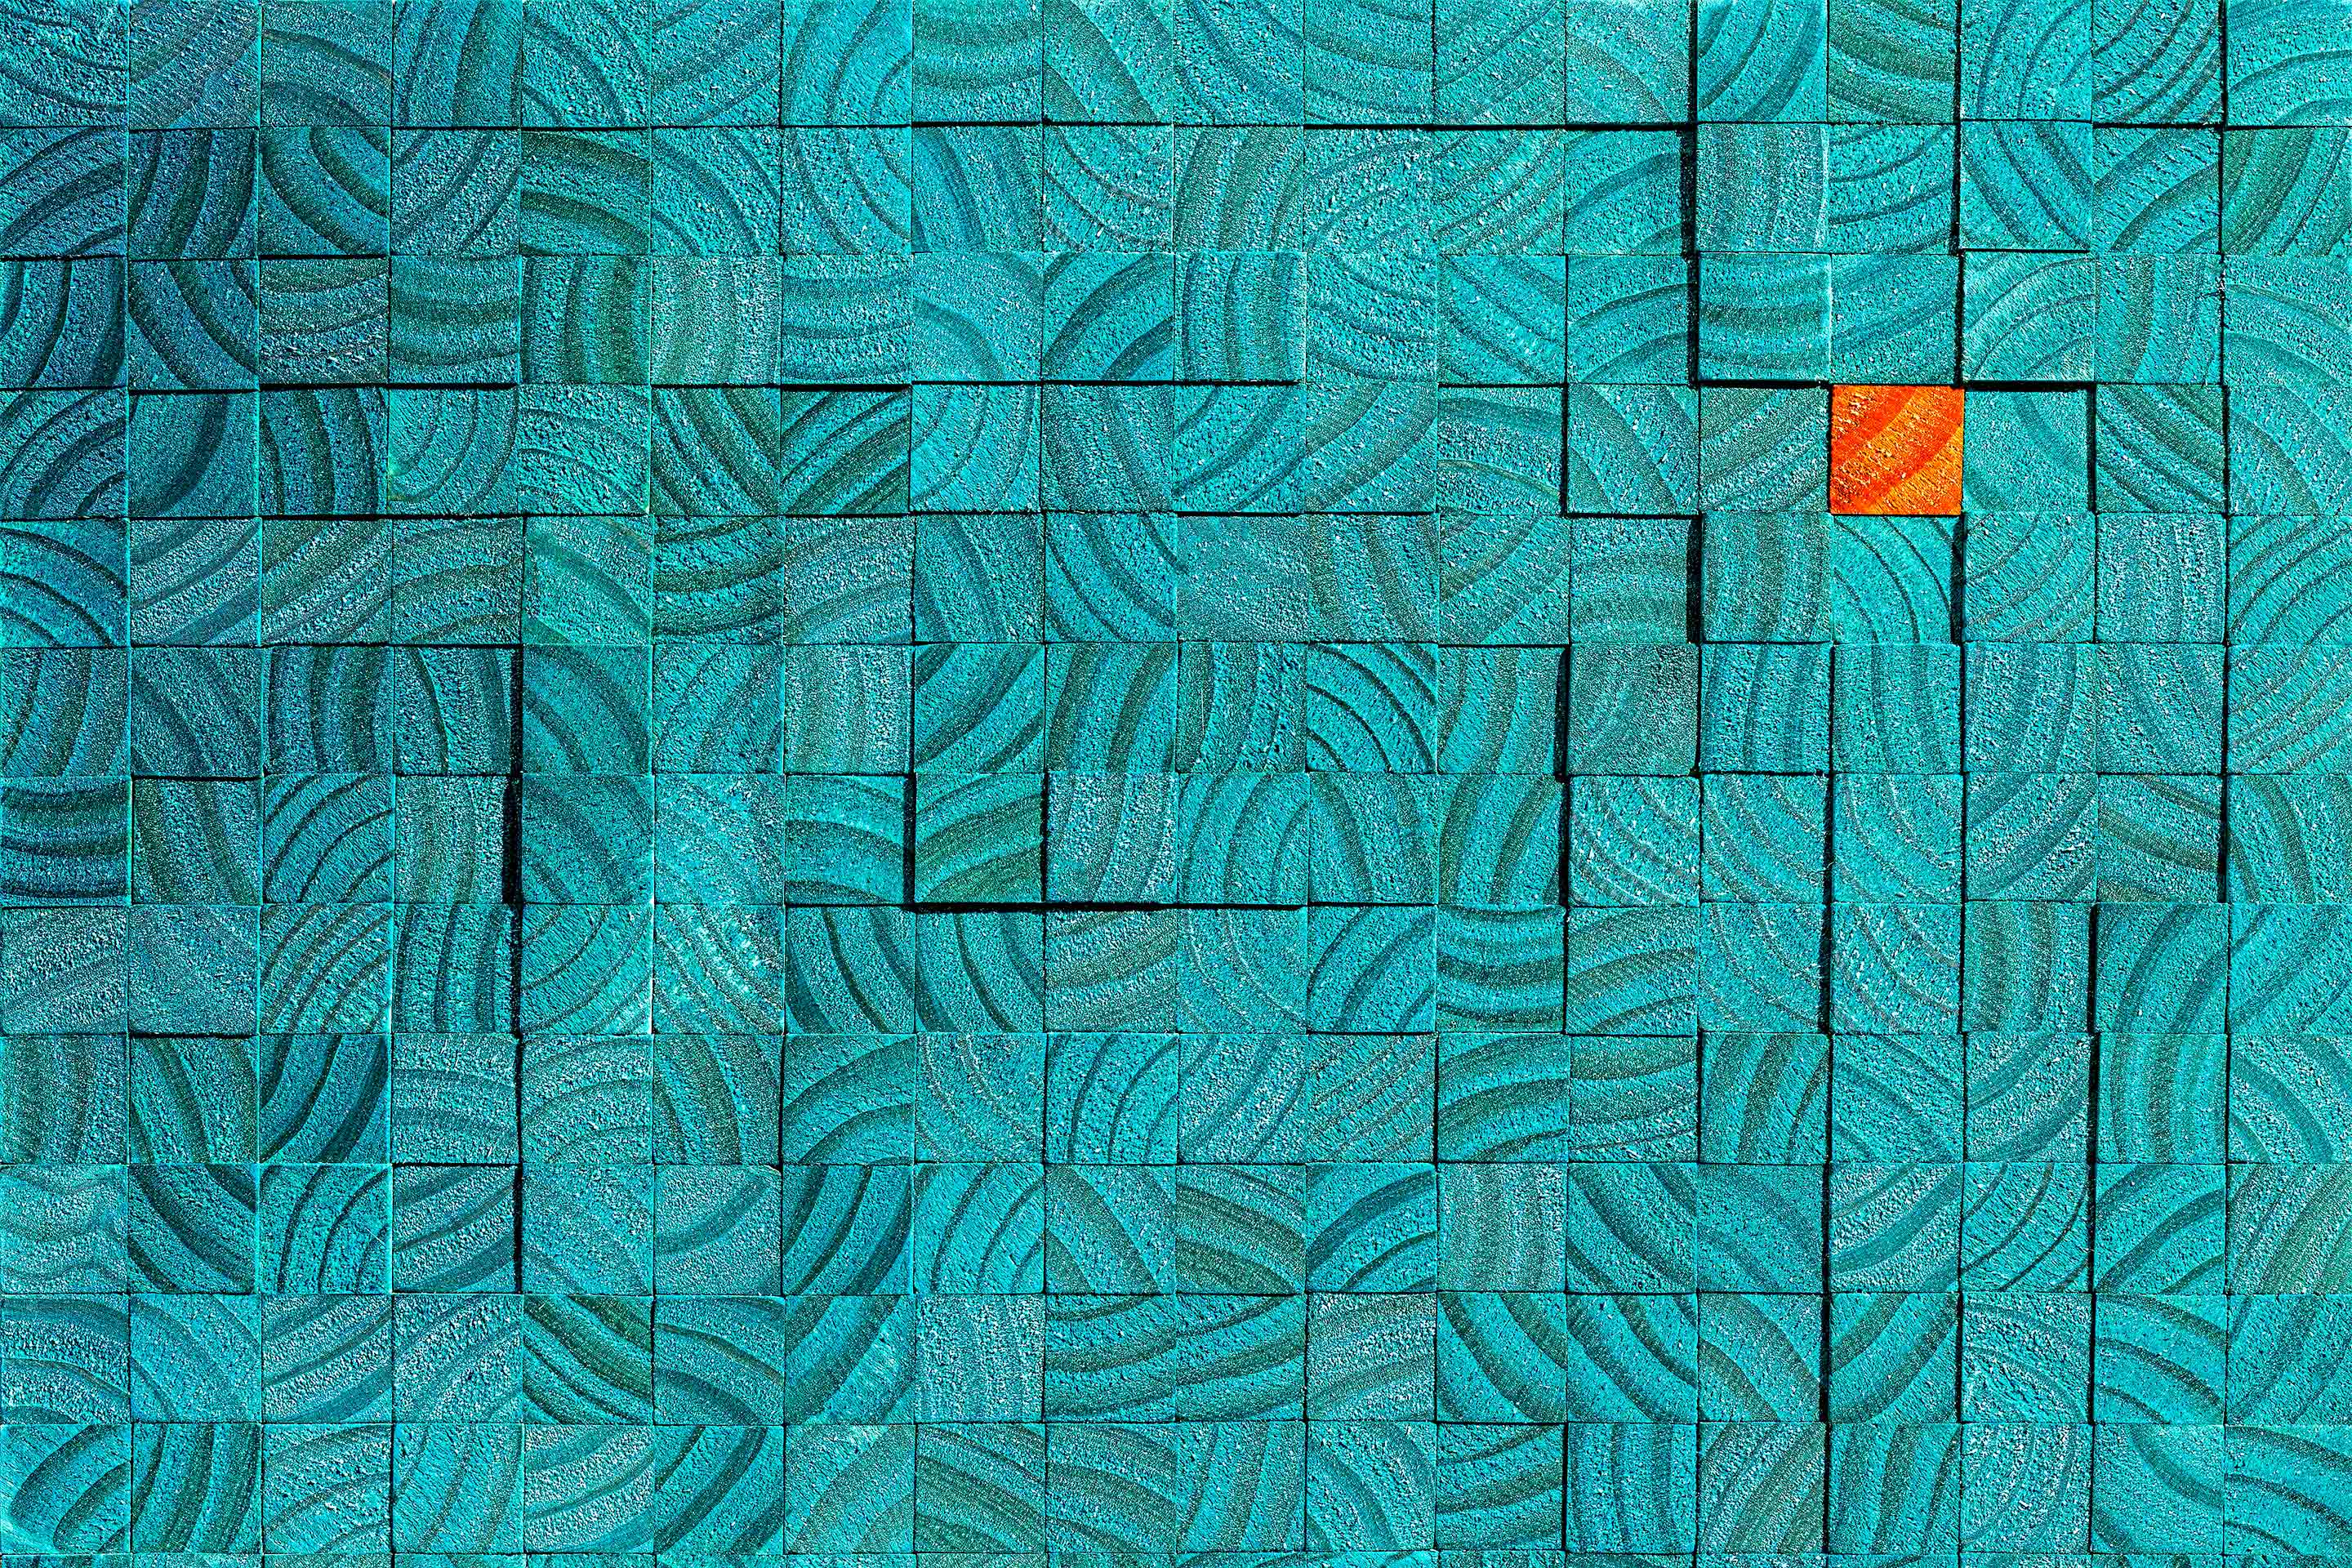 A orange block nestles among blue blocks, creating a metaphor for customization.